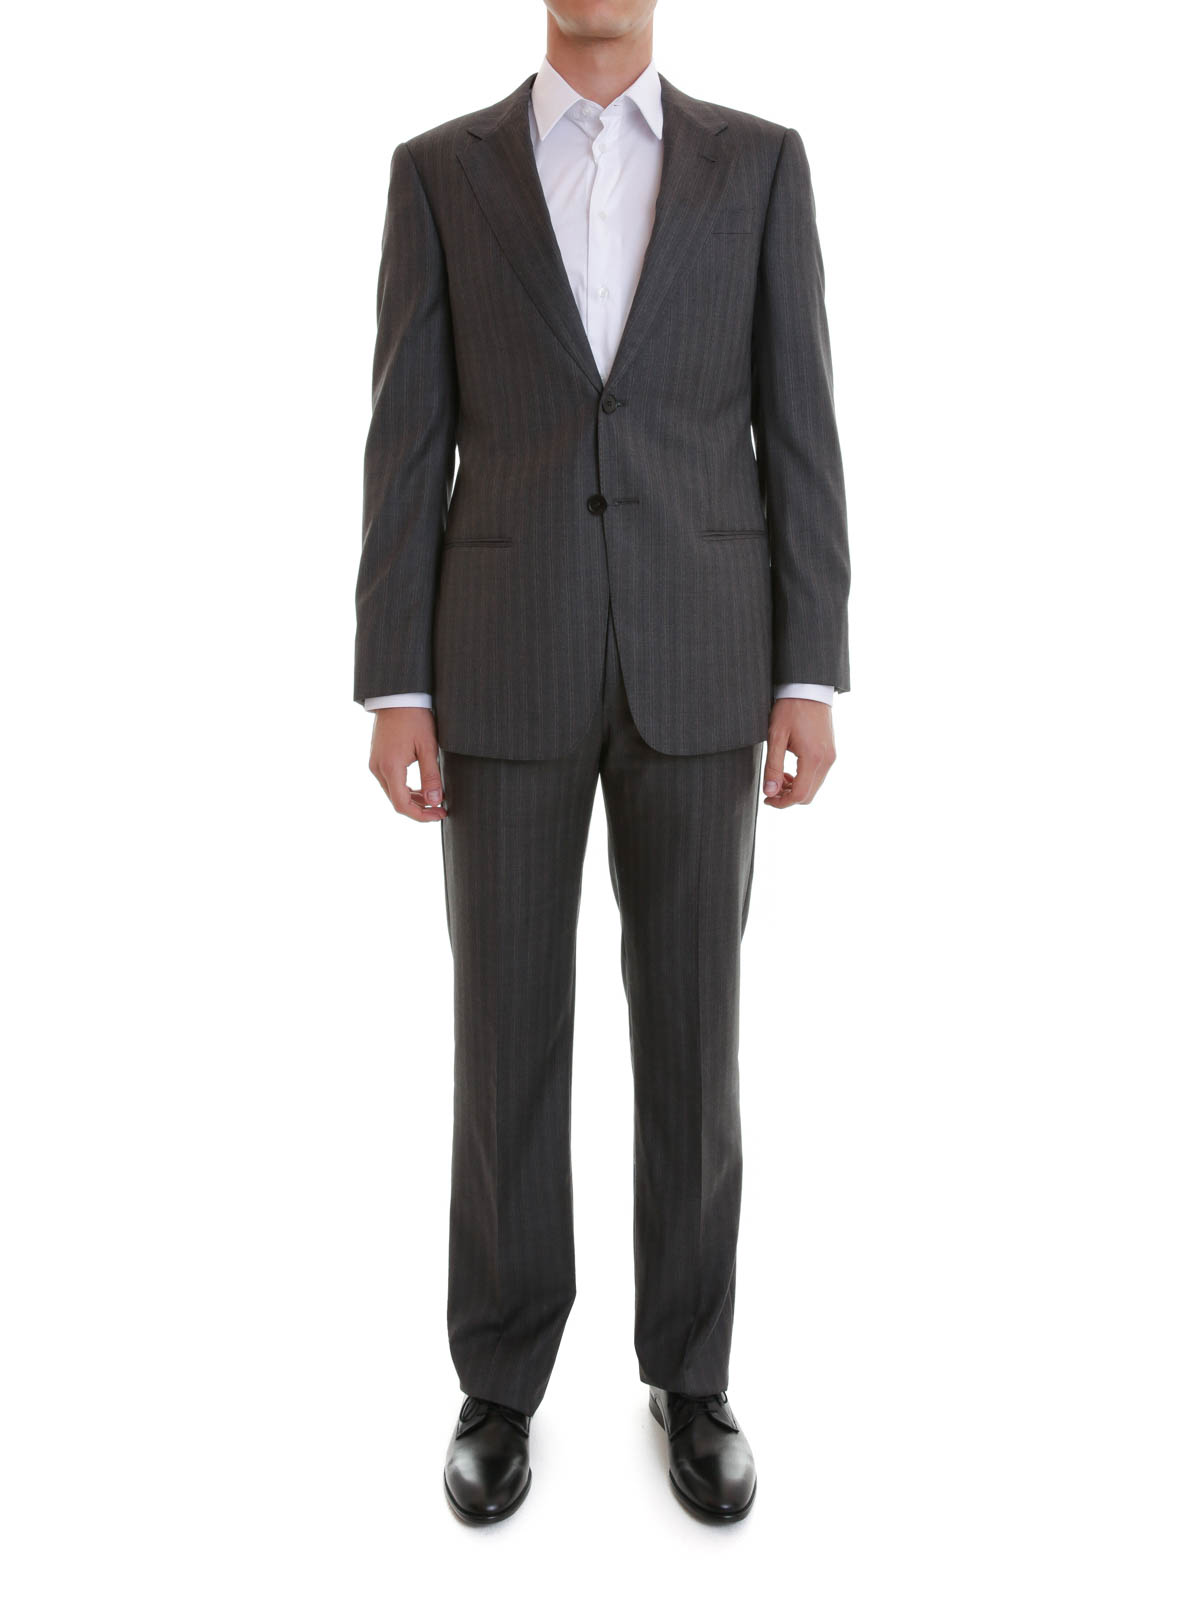 UOMO COLLEZIONI / Blue Pinstripe Suit  Blue pinstripe suit, Pinstripe  suit, Mens fashion suits